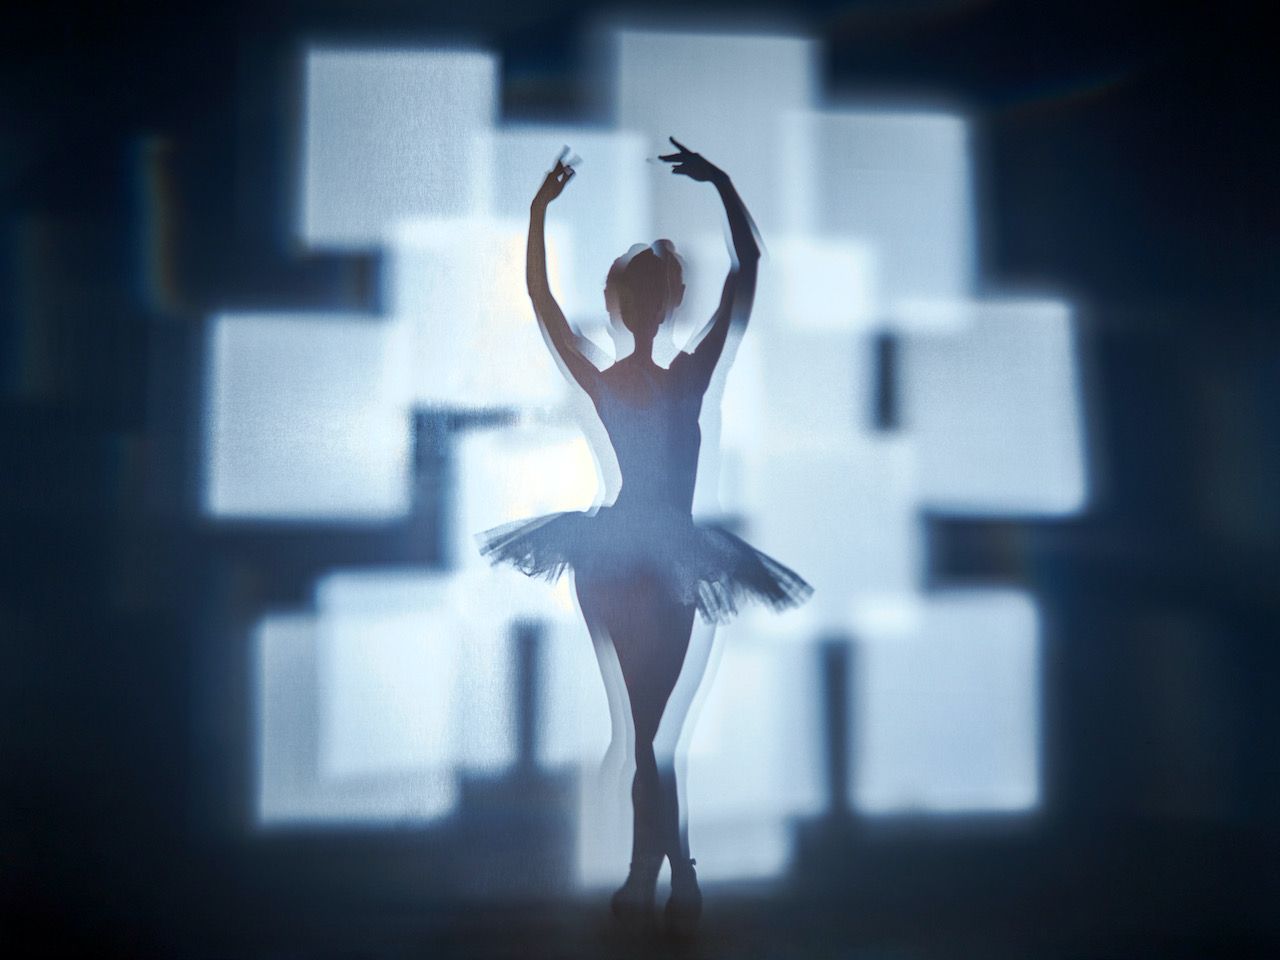 Michael Haegele 抽象摄影作品中的芭蕾舞者剪影，背景是发光的重叠方块。